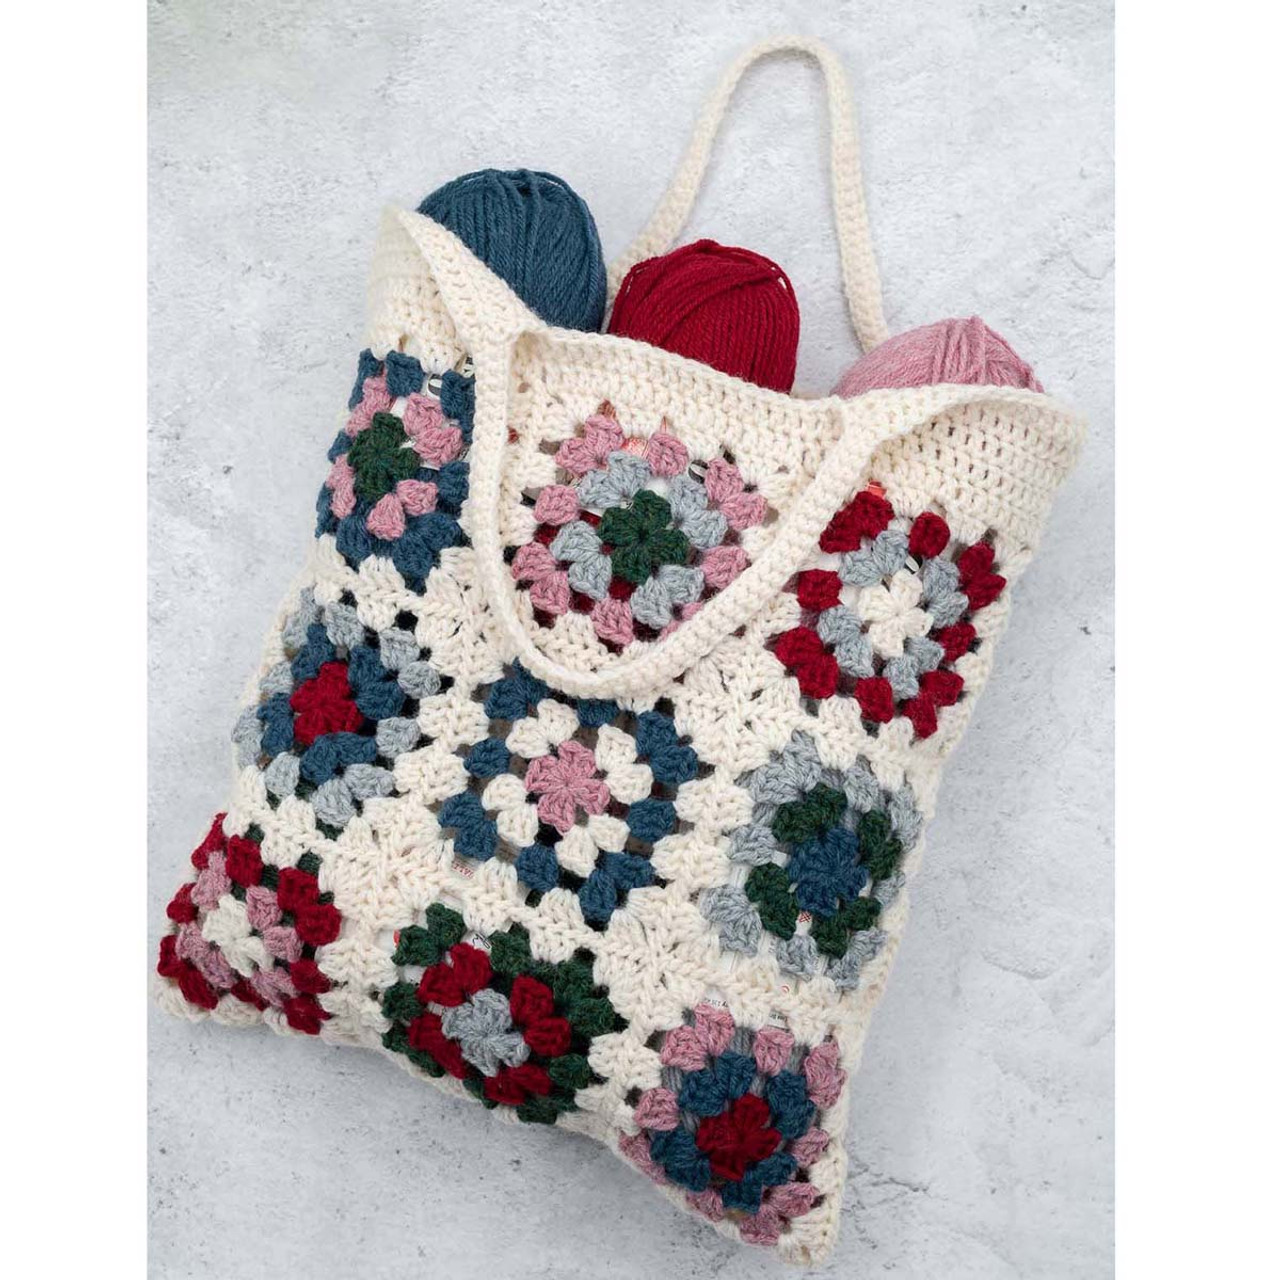 Granny Square Heart Tote Bag: Crochet pattern